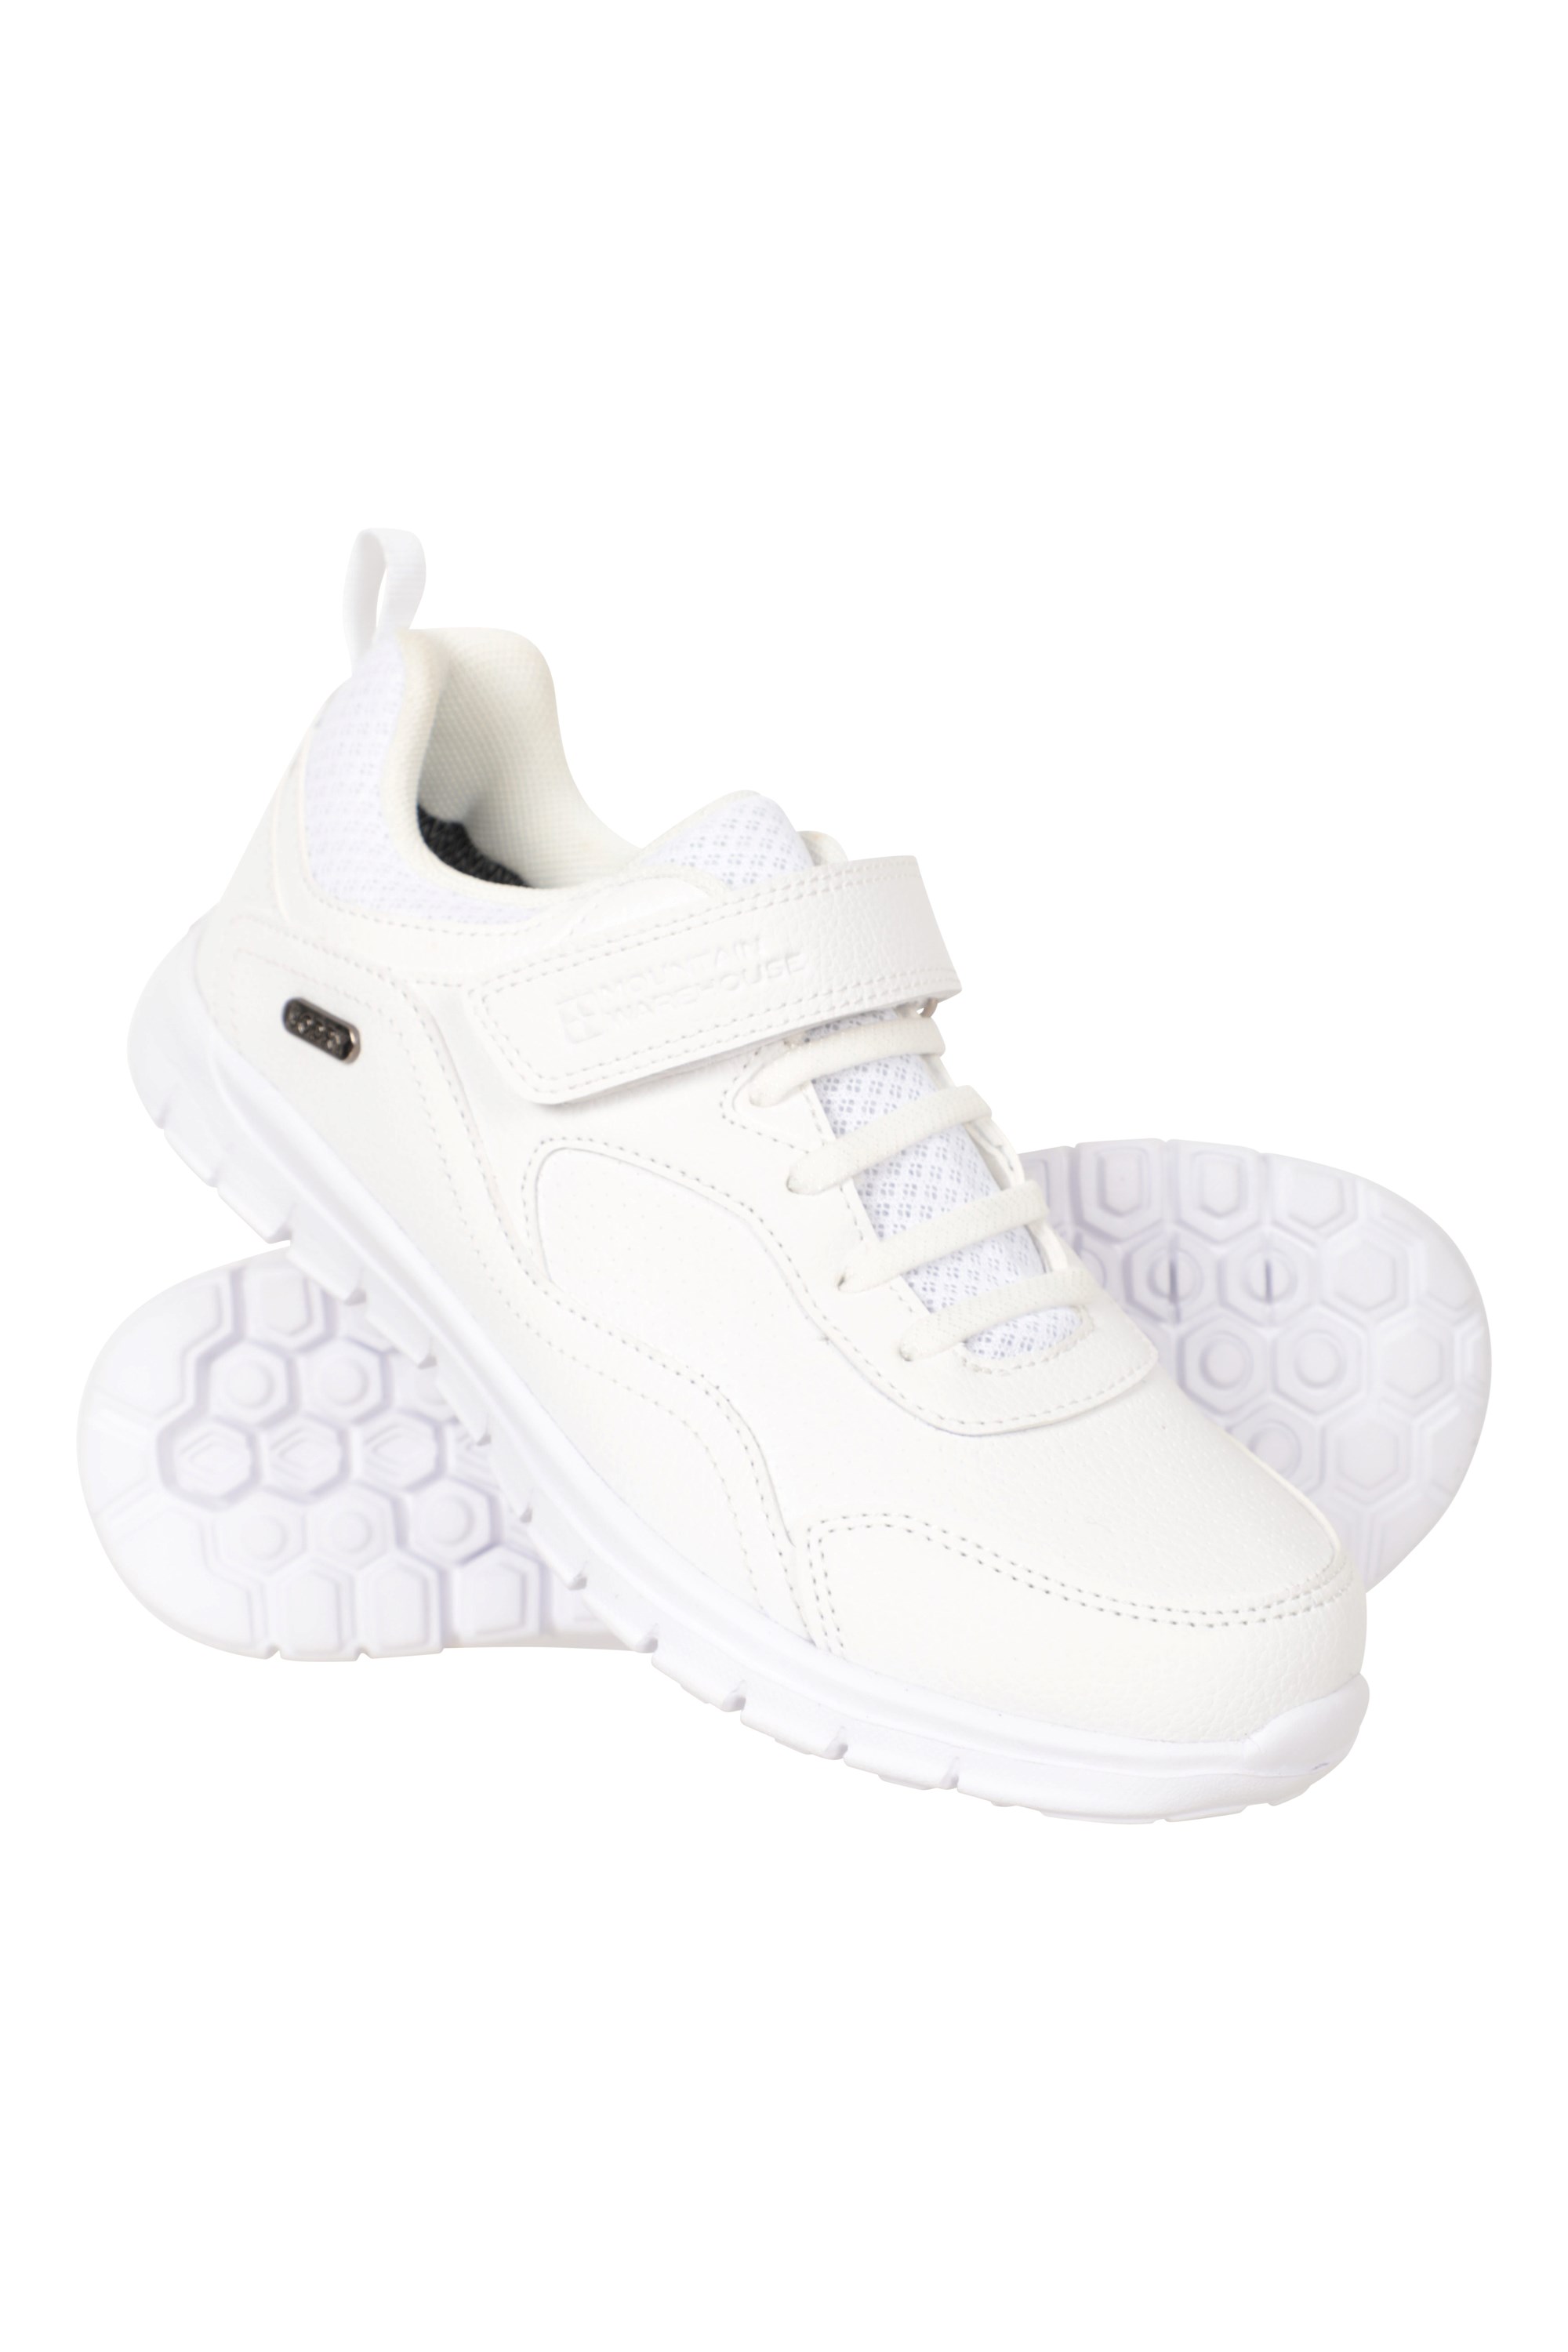 Burst Kids Adaptive Waterproof Active Shoes - White